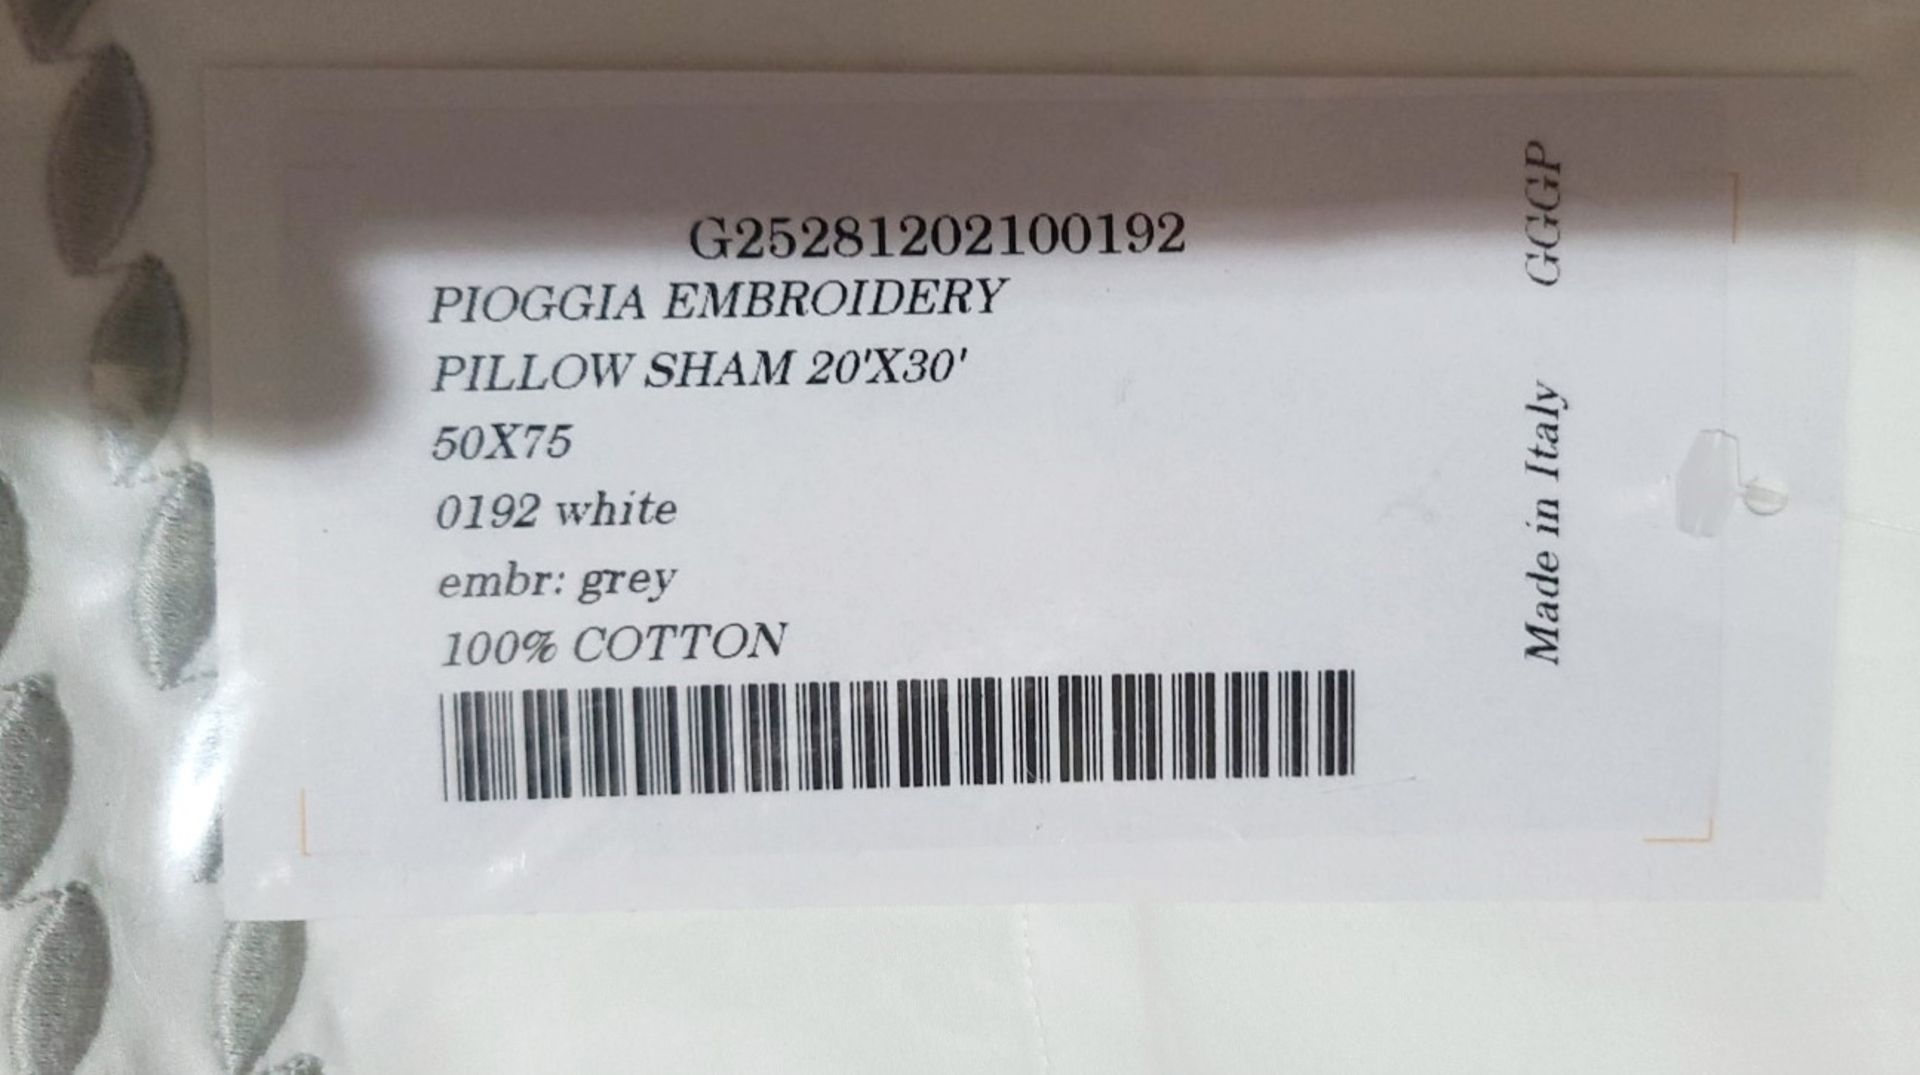 Set of 2 PRATESI Pioggia Embroidery Pillow Shaw 2 50x75cm- Original Price £570.00 - Unused Boxed - Image 4 of 6